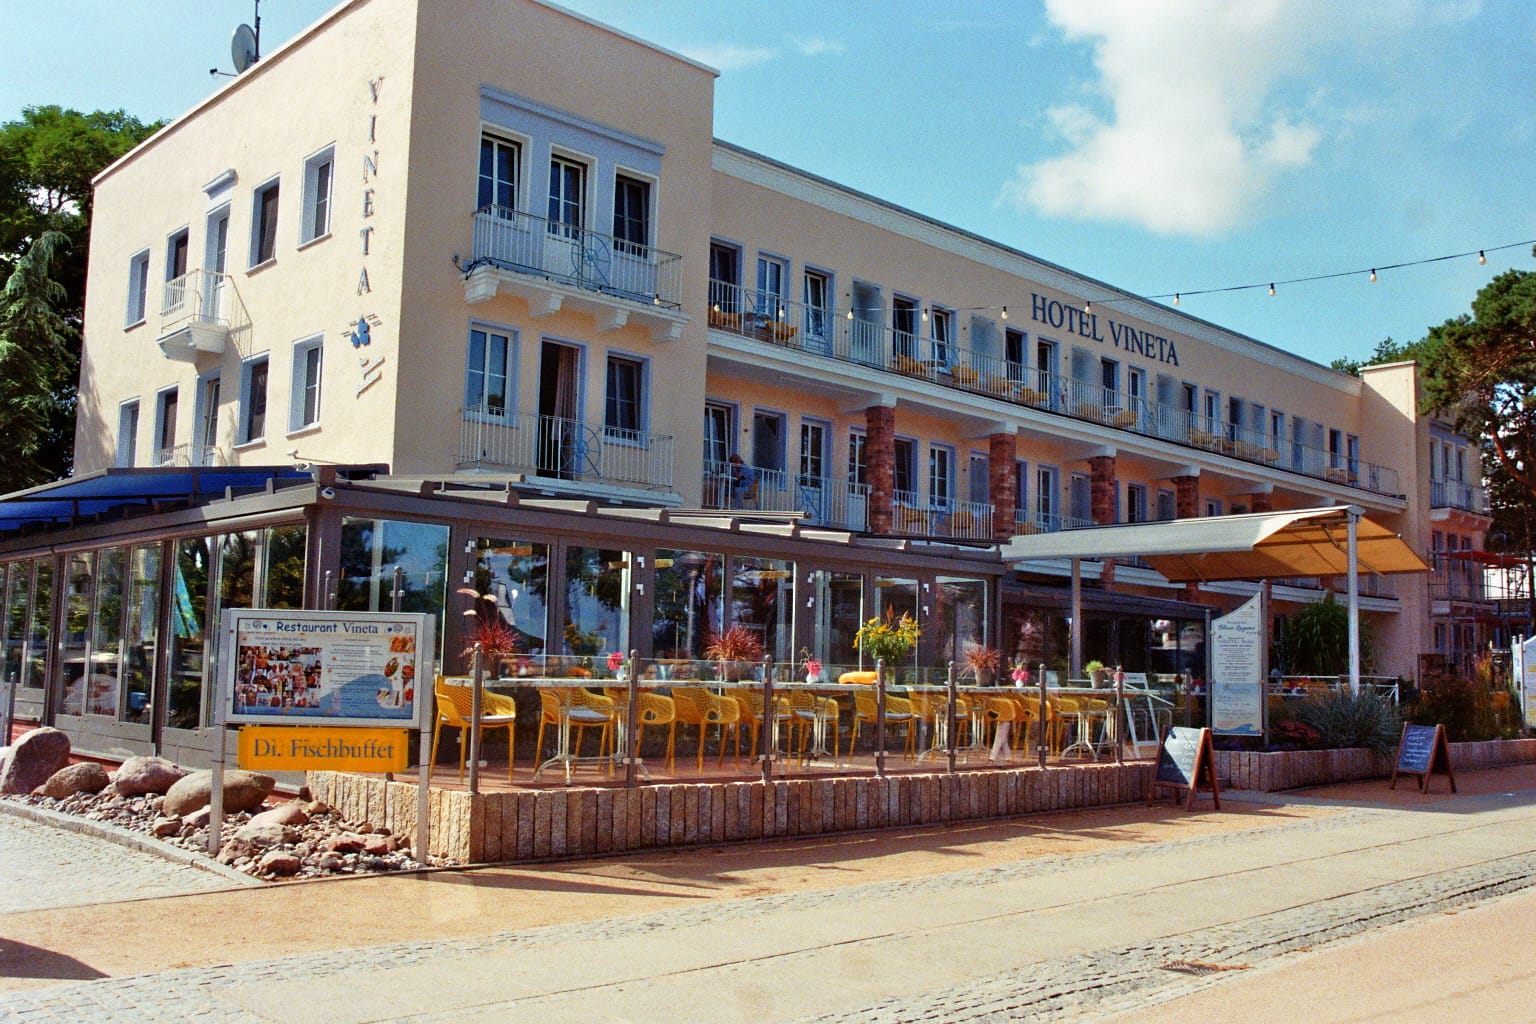 Hotel "Vineta" in Zinnowitz auf Usedom